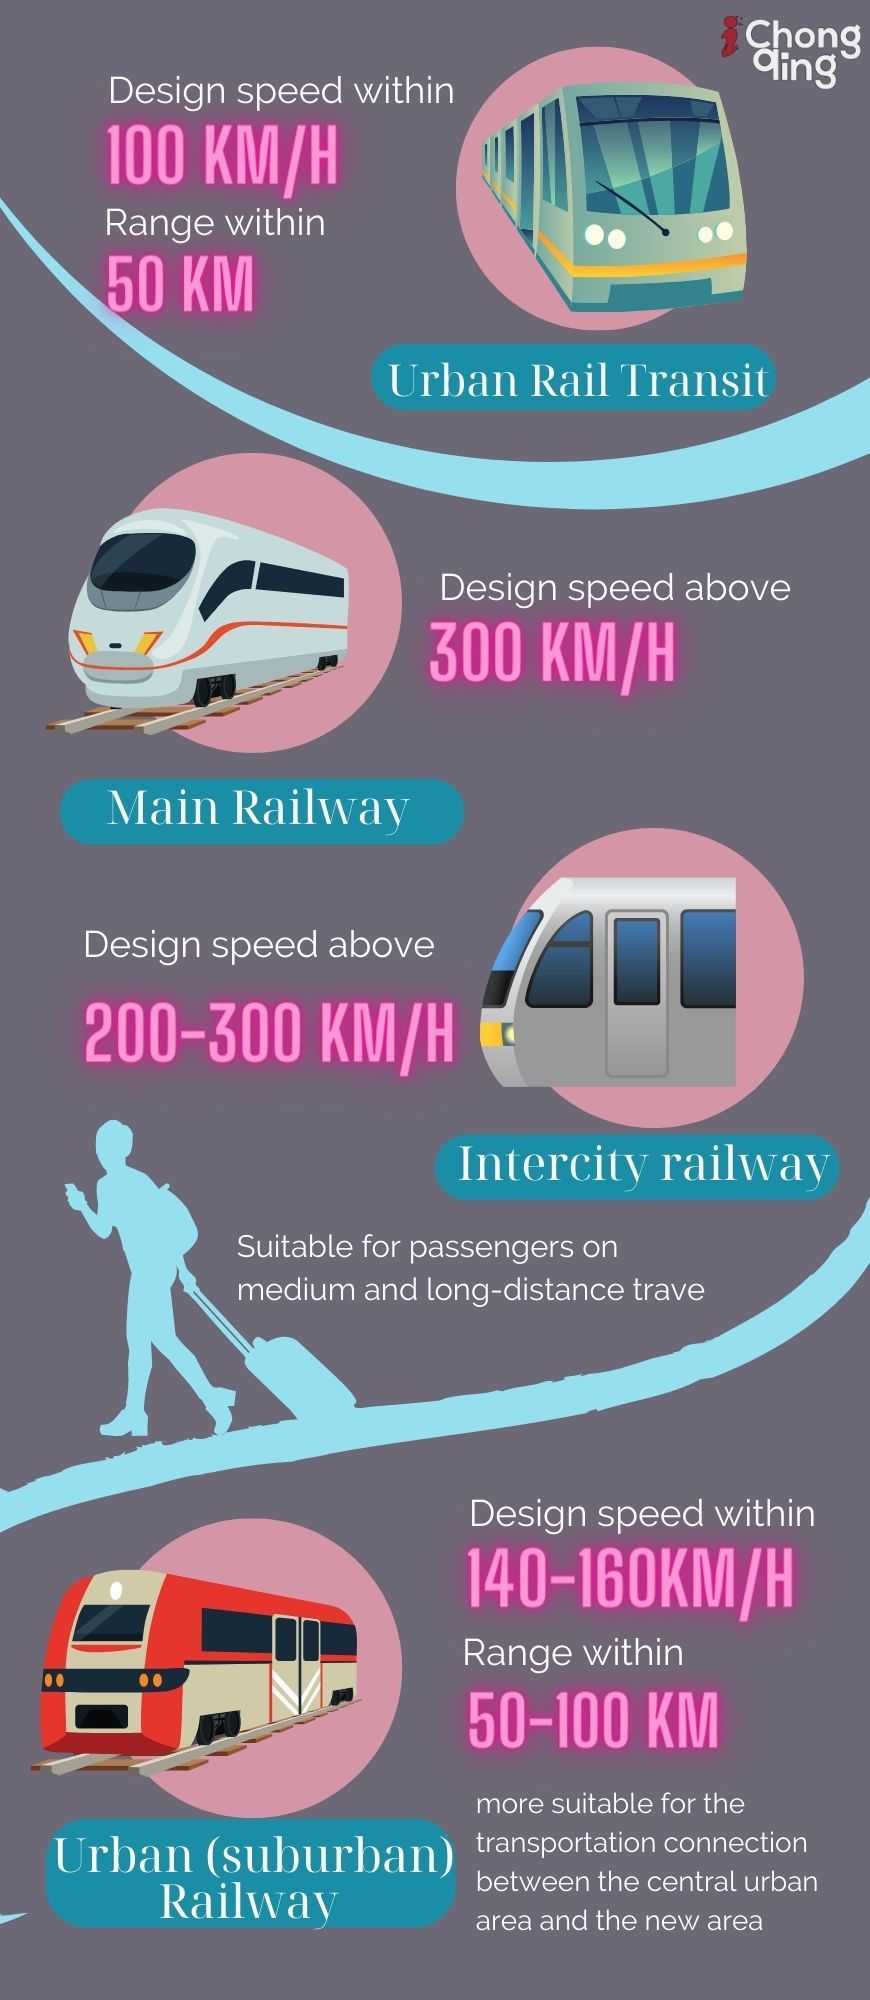 Chongqing rail network planning